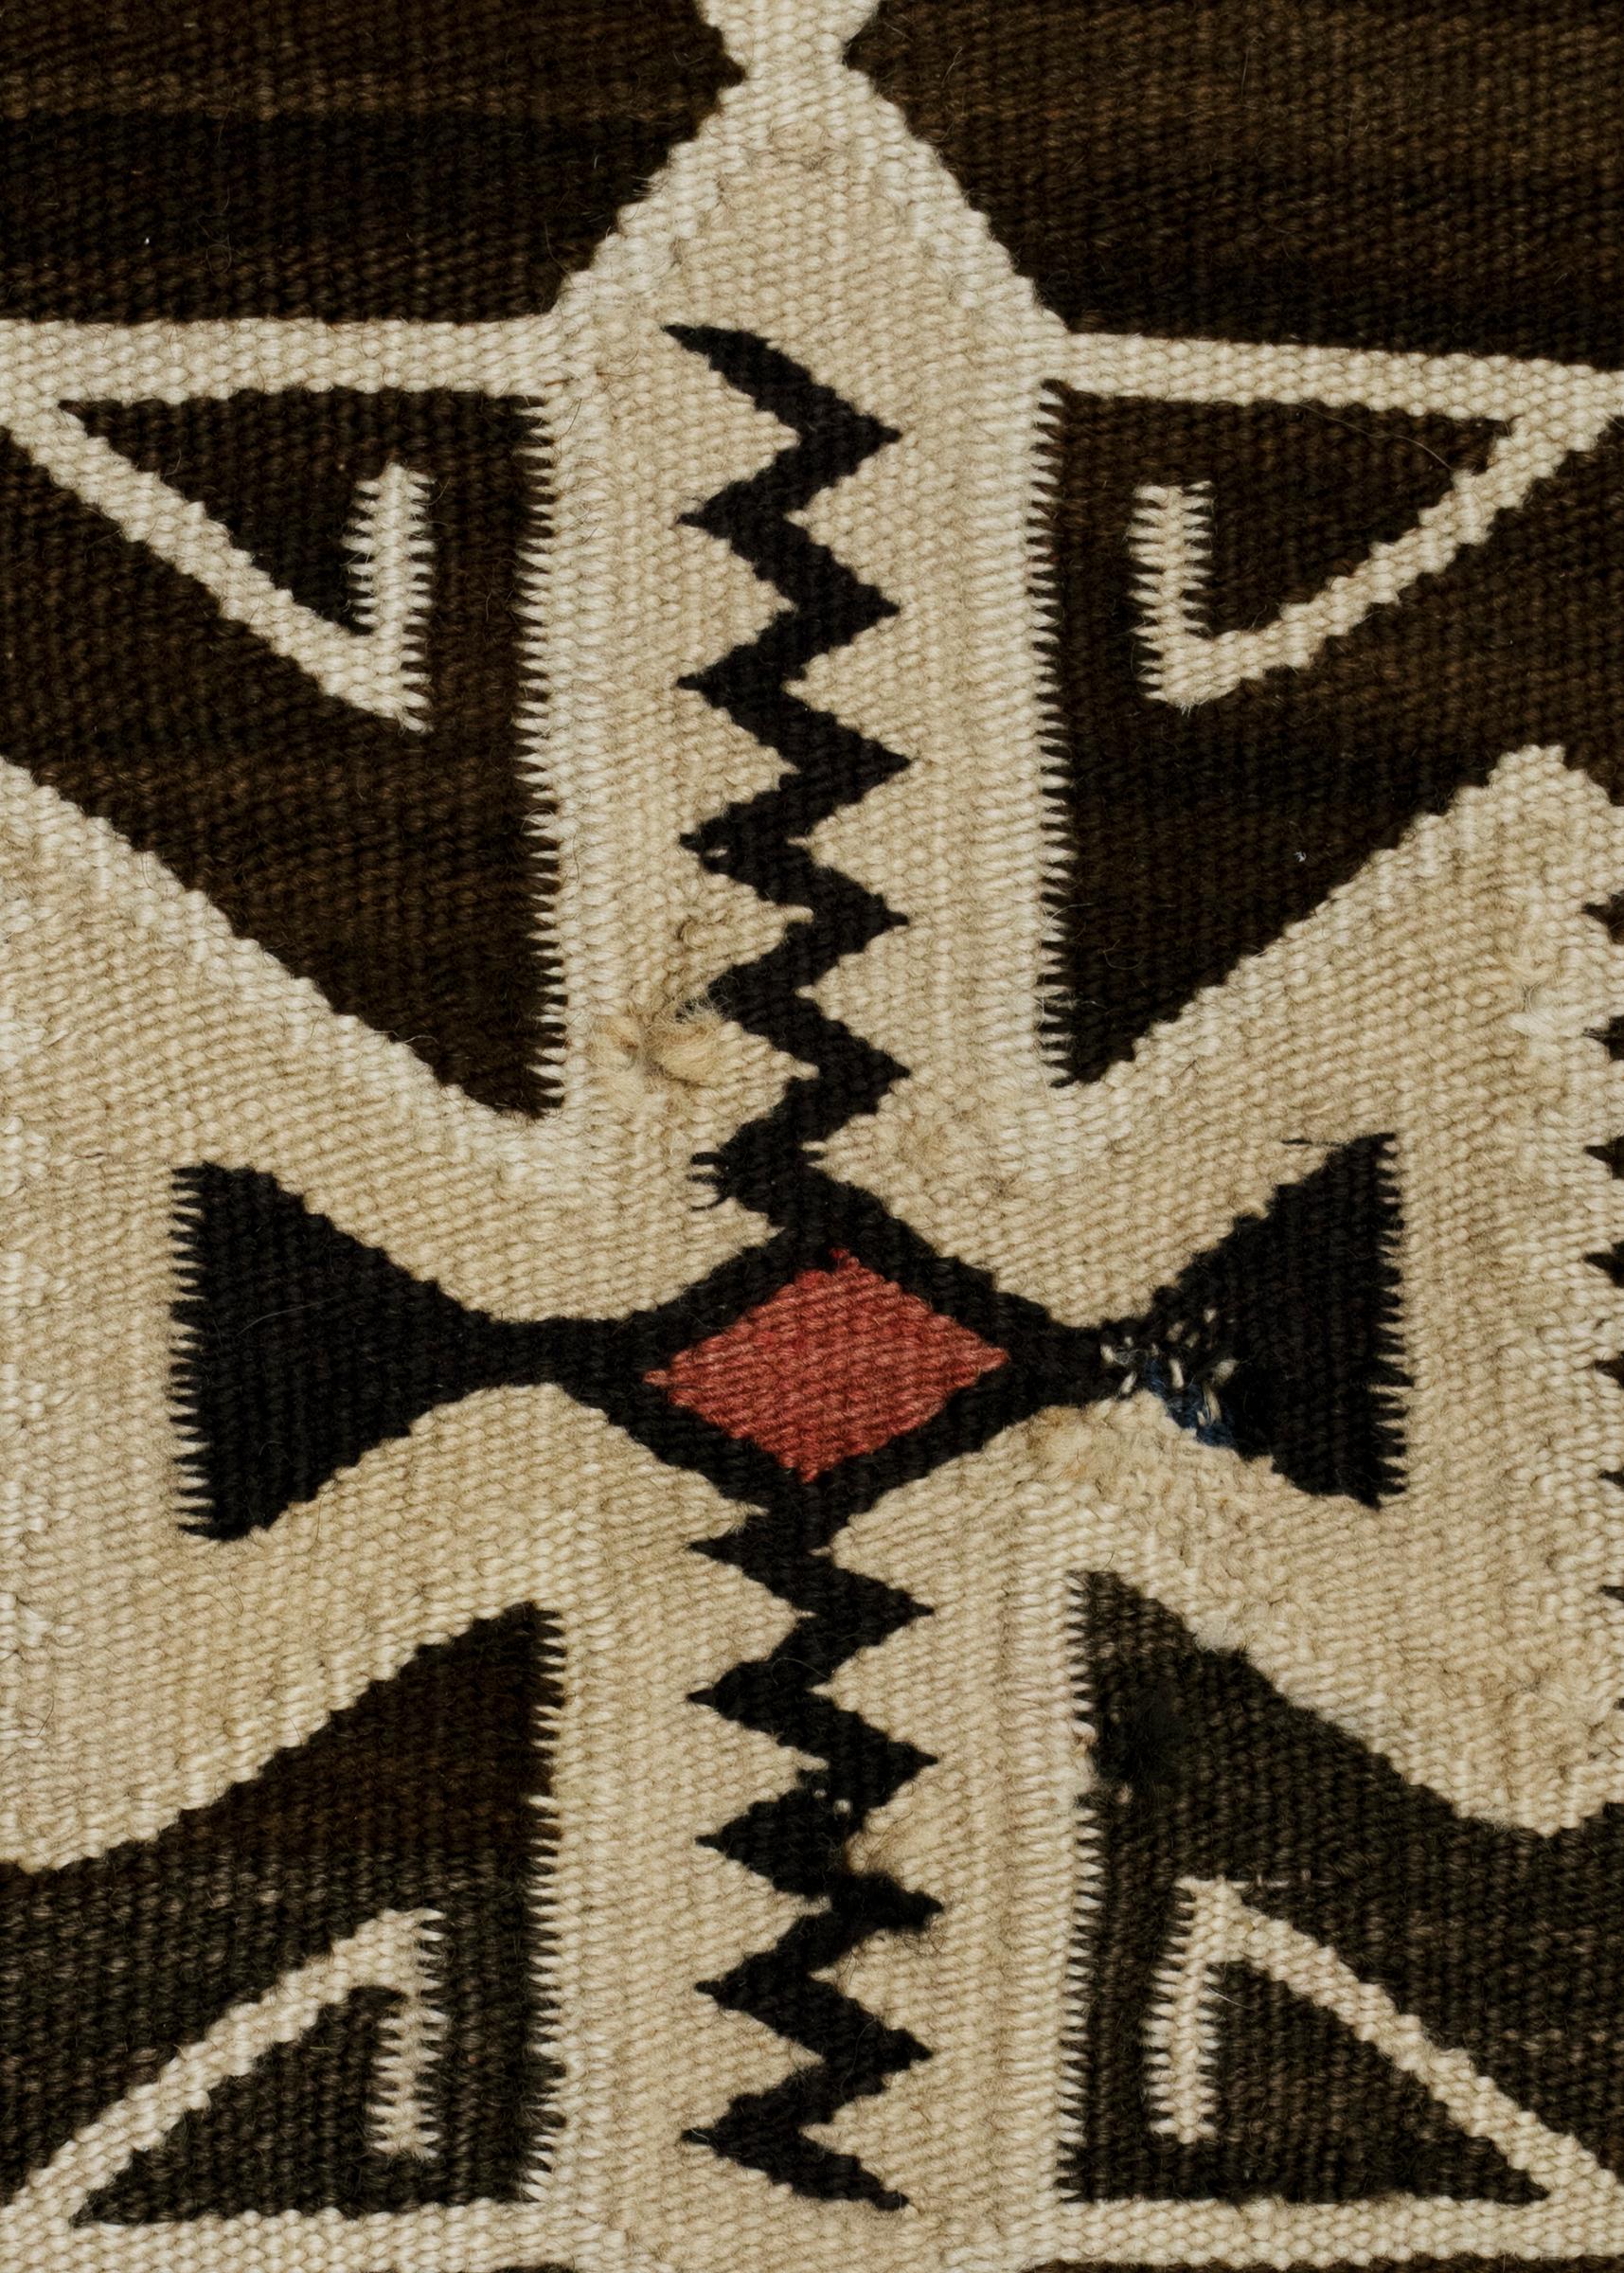 Hand-Woven Vintage Navajo Pictorial Area Rug, Teec Nos Pos Trading Post